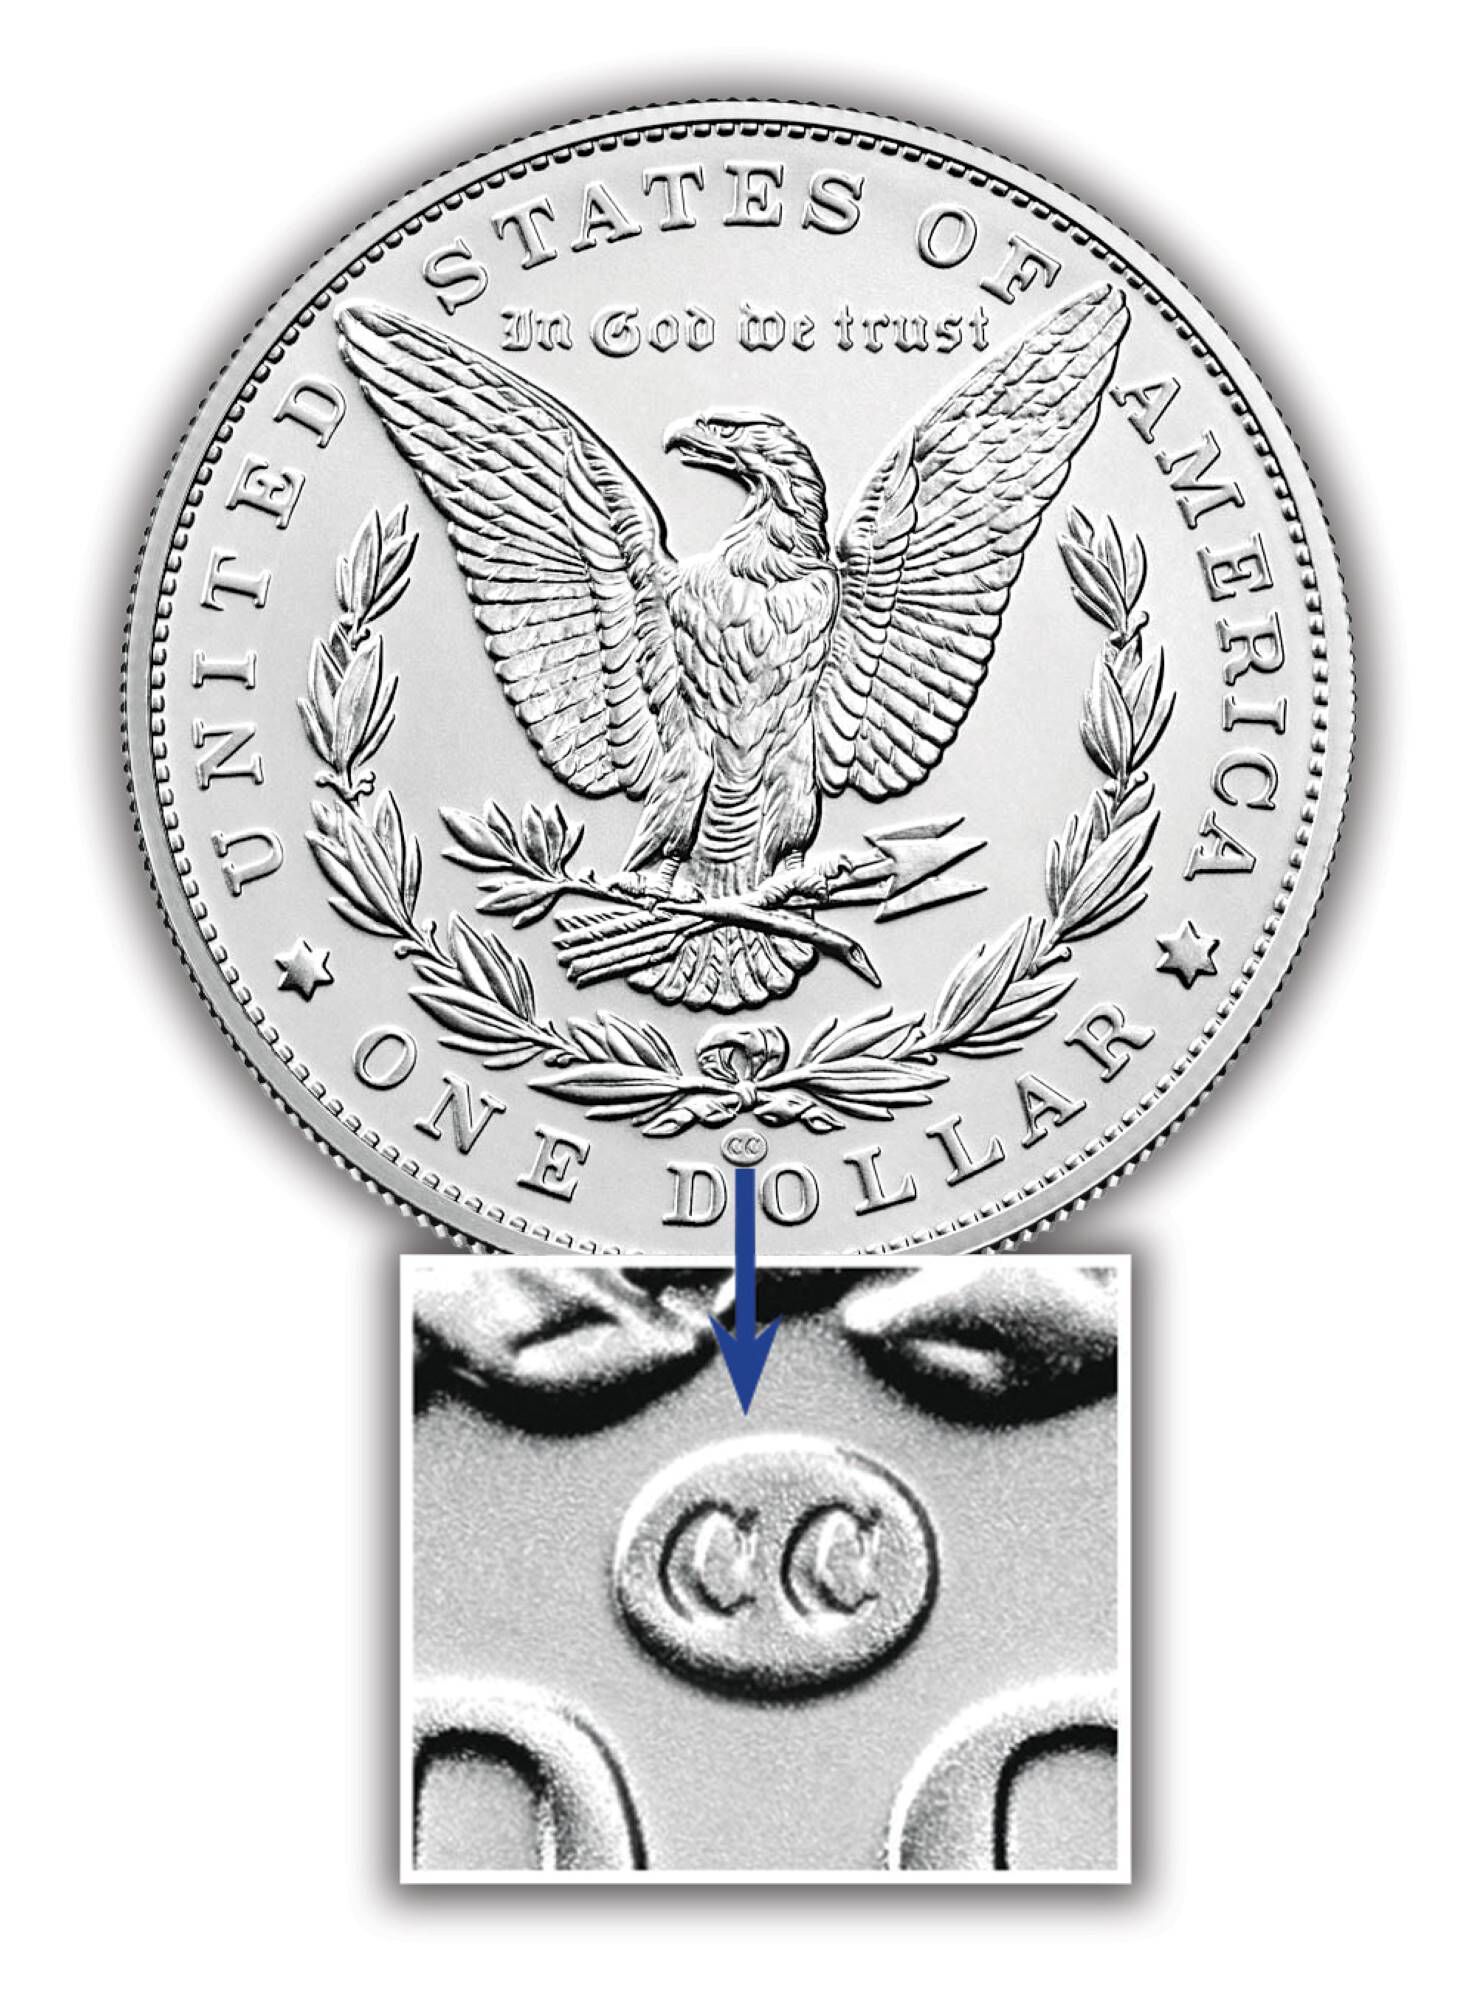 cc mint morgan silver dollar anniversary coin C1M c Mark